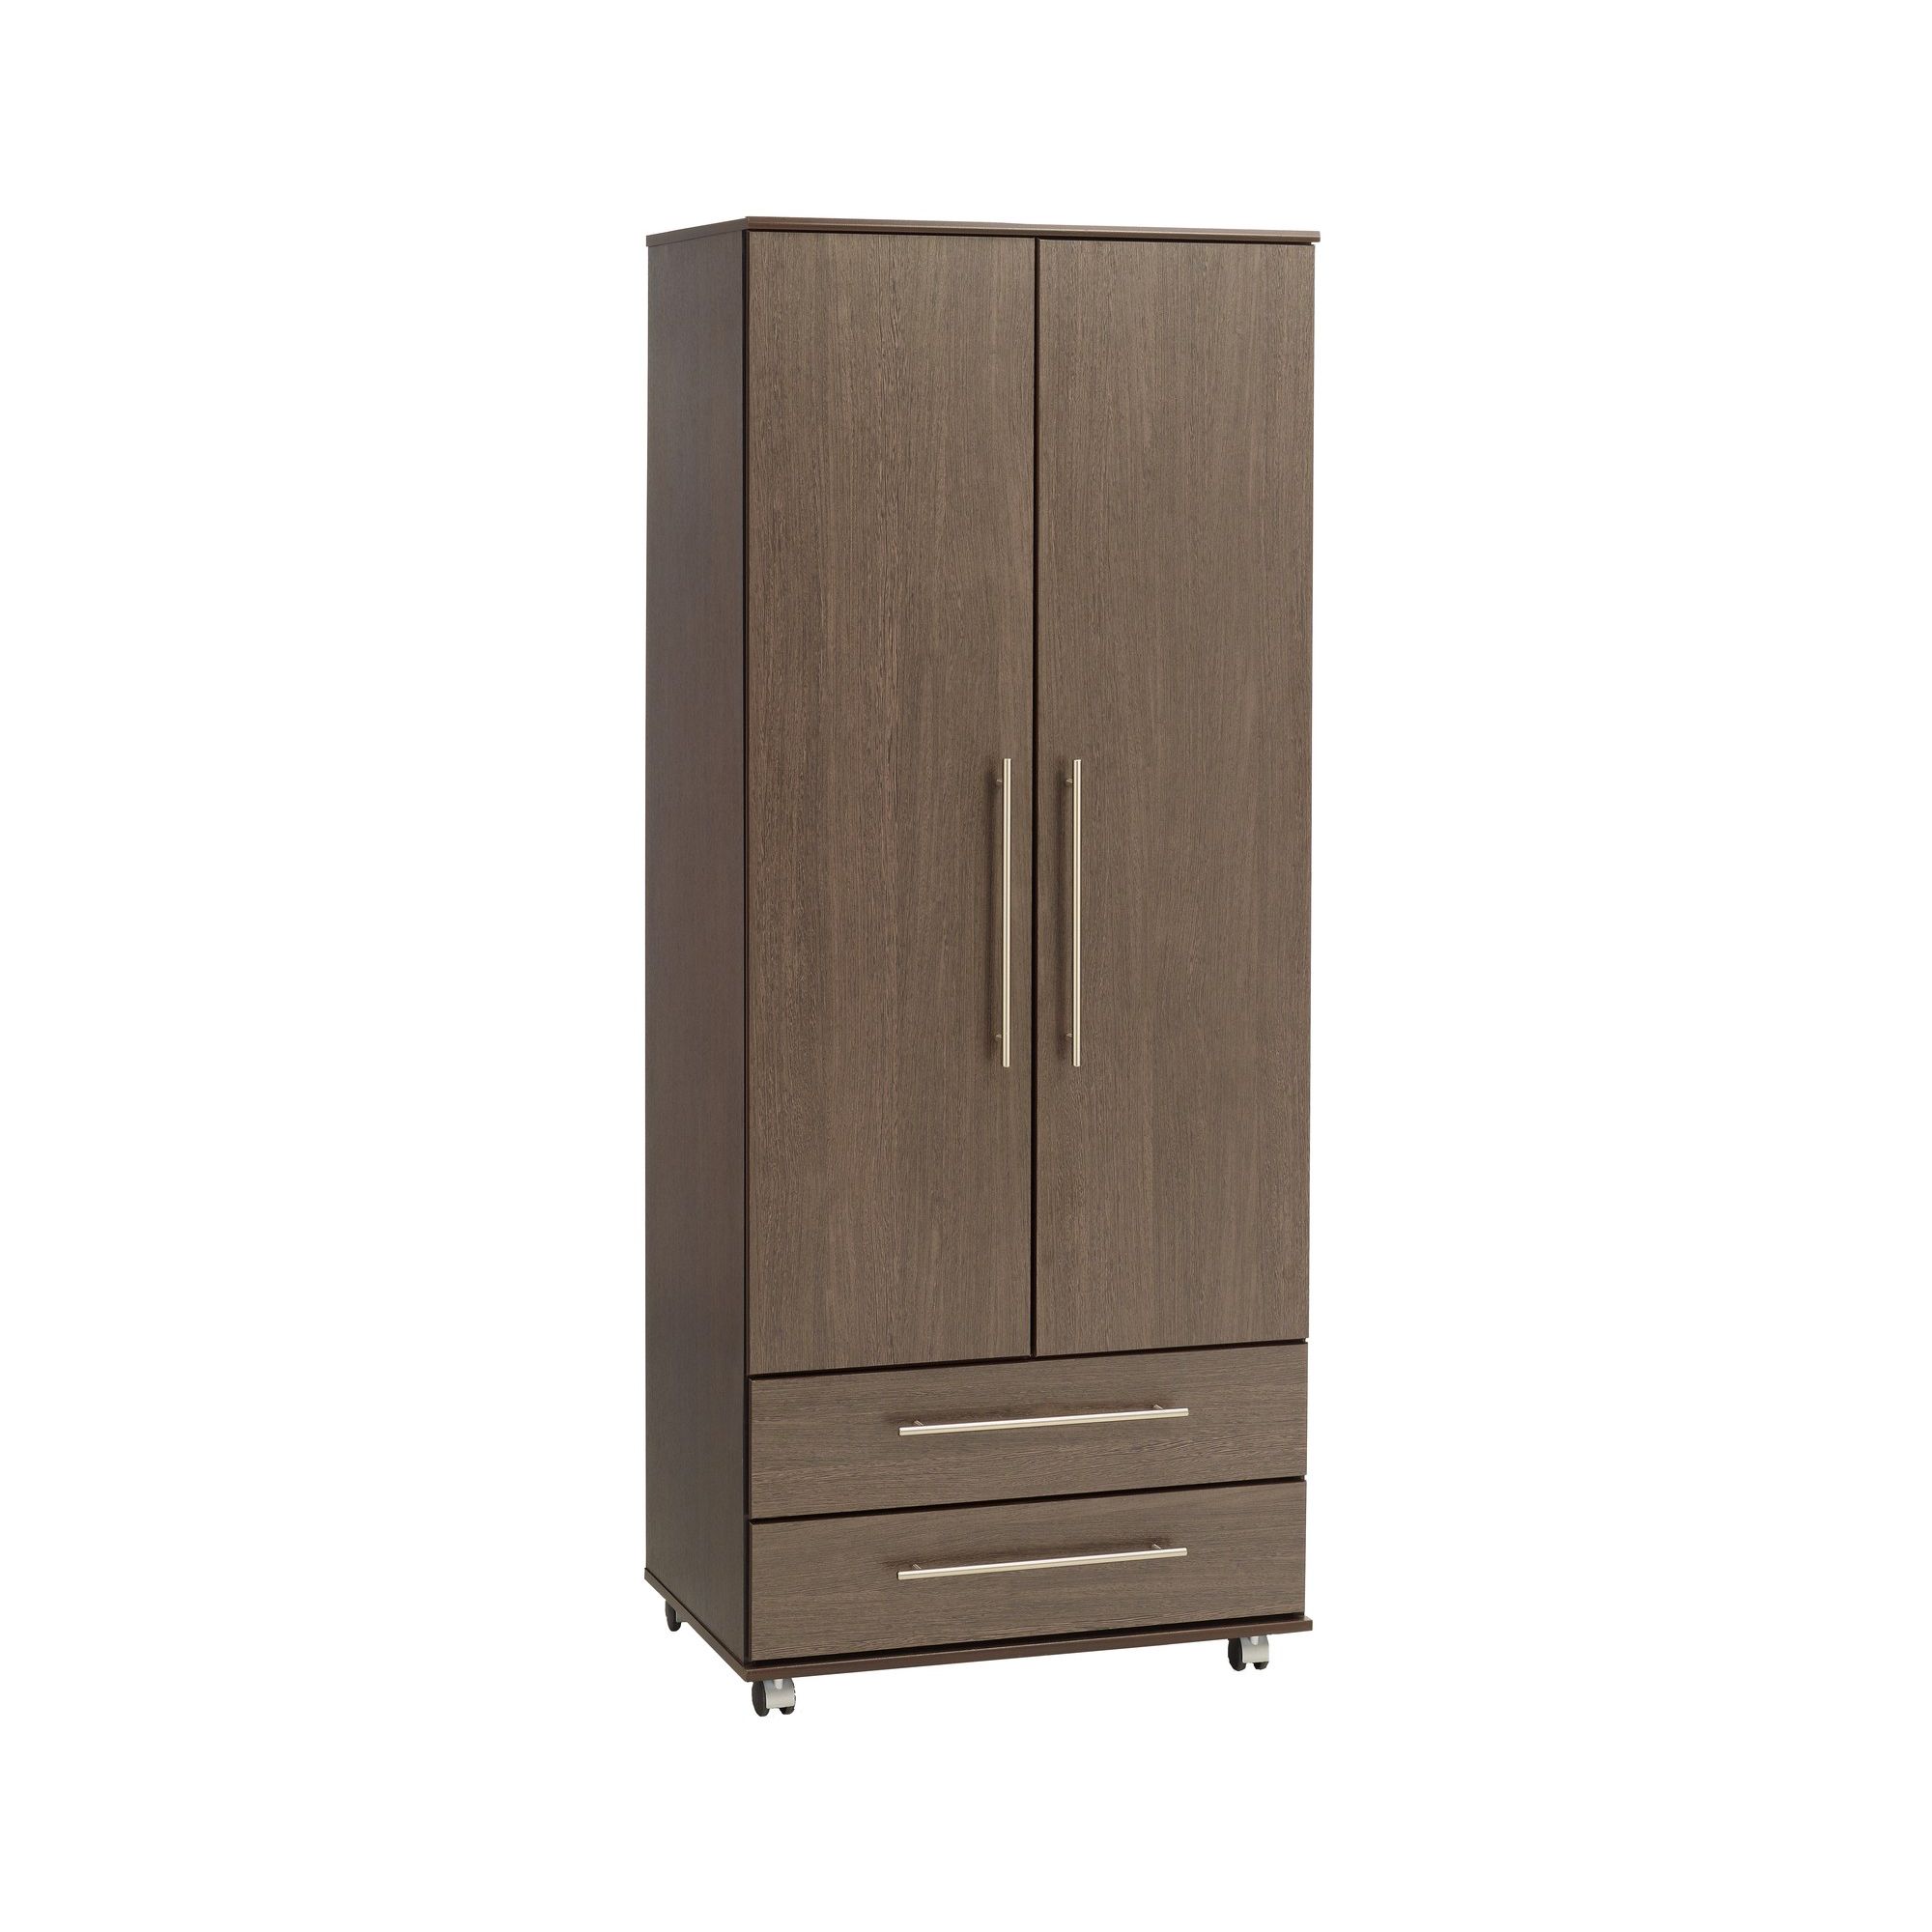 Ideal Furniture New York Combi Wardrobe - Oak at Tescos Direct